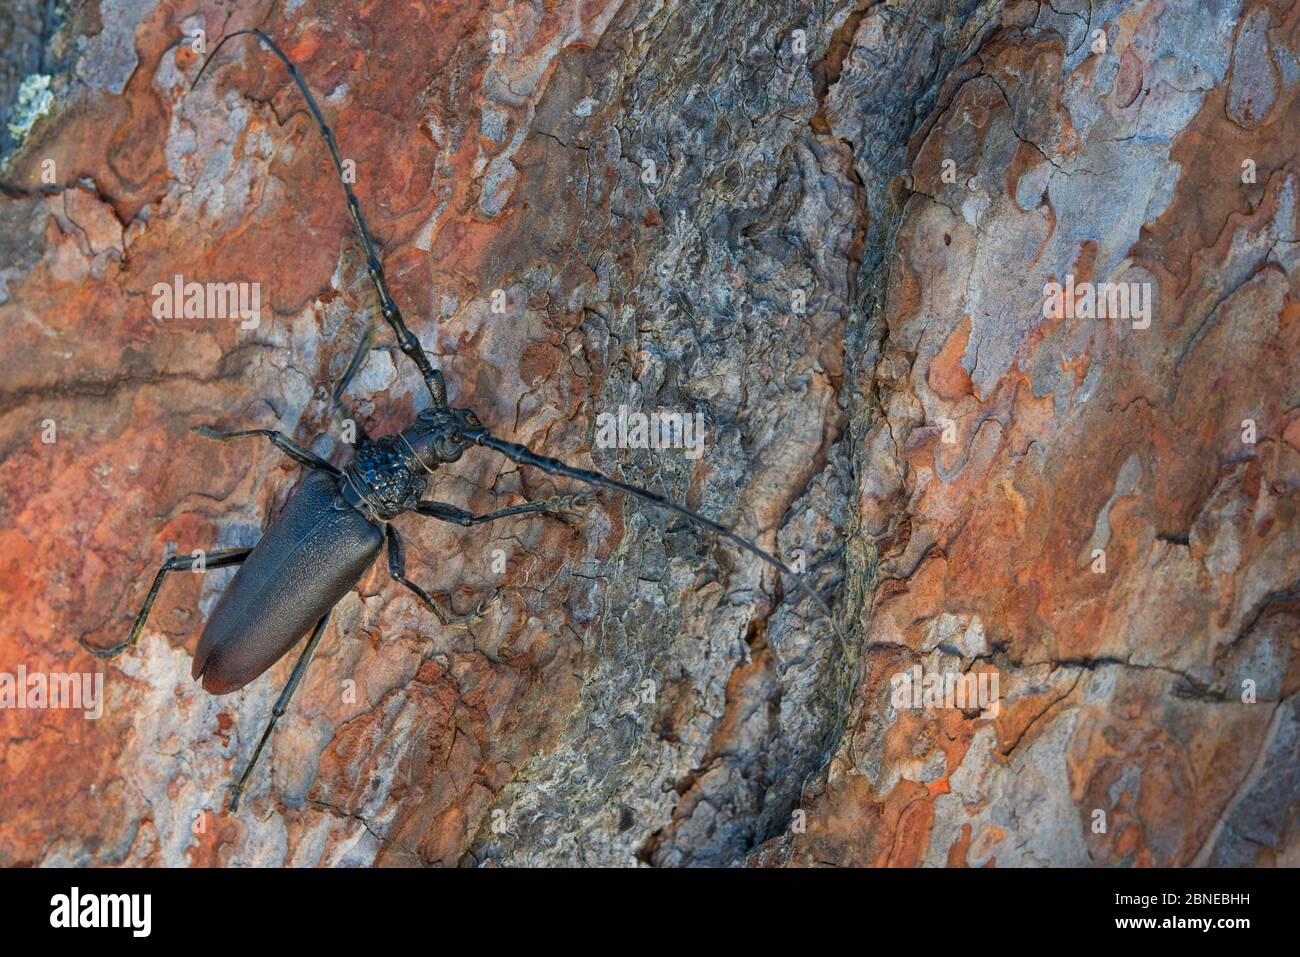 Great capricorn beetle (Cerambyx cerdo) on tree trunk, Arrabida Mountain Range, Portugal, August. Stock Photo